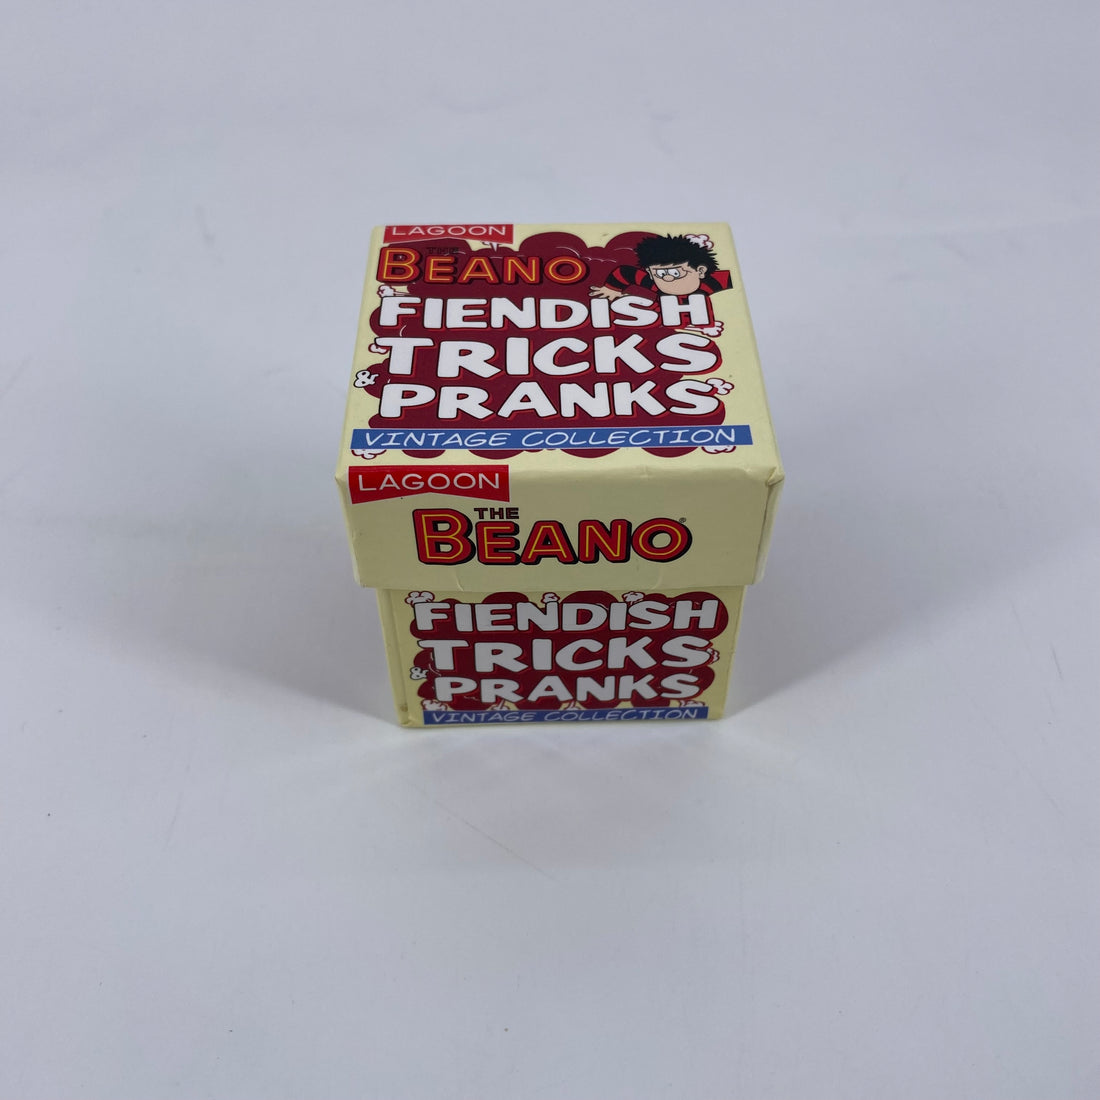 The beano - Fiendish, tricks, pranks- Édition 2012